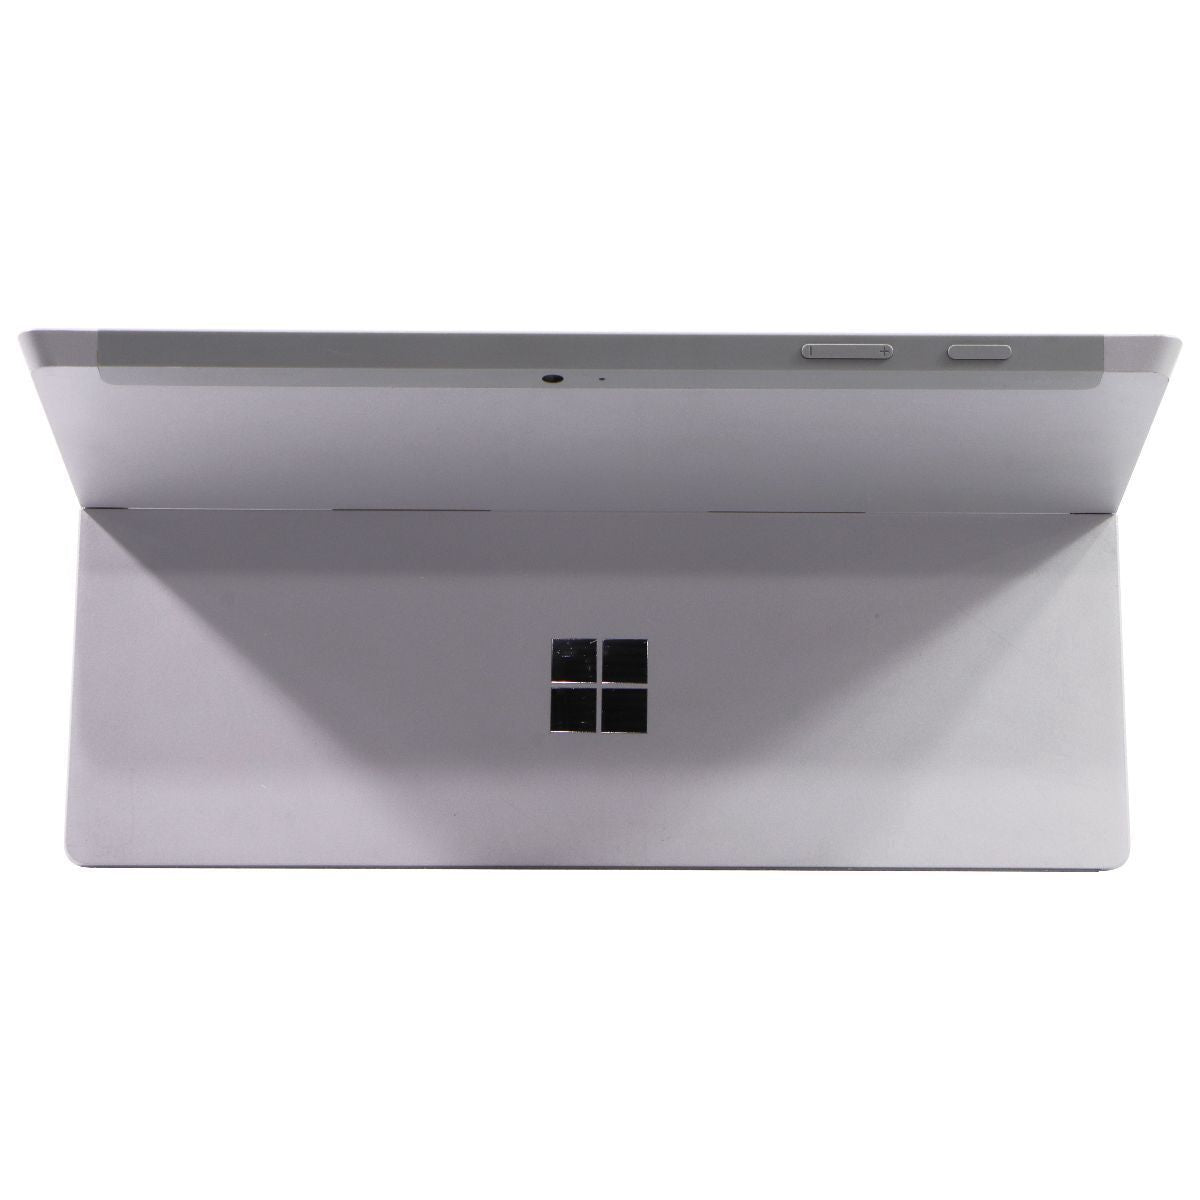 Microsoft Surface 3 (10.8-in) 1657 Wifi+LTE Intel Atom 64GB SSD/2GB Win10 Pro Laptops - PC Laptops & Netbooks Microsoft    - Simple Cell Bulk Wholesale Pricing - USA Seller